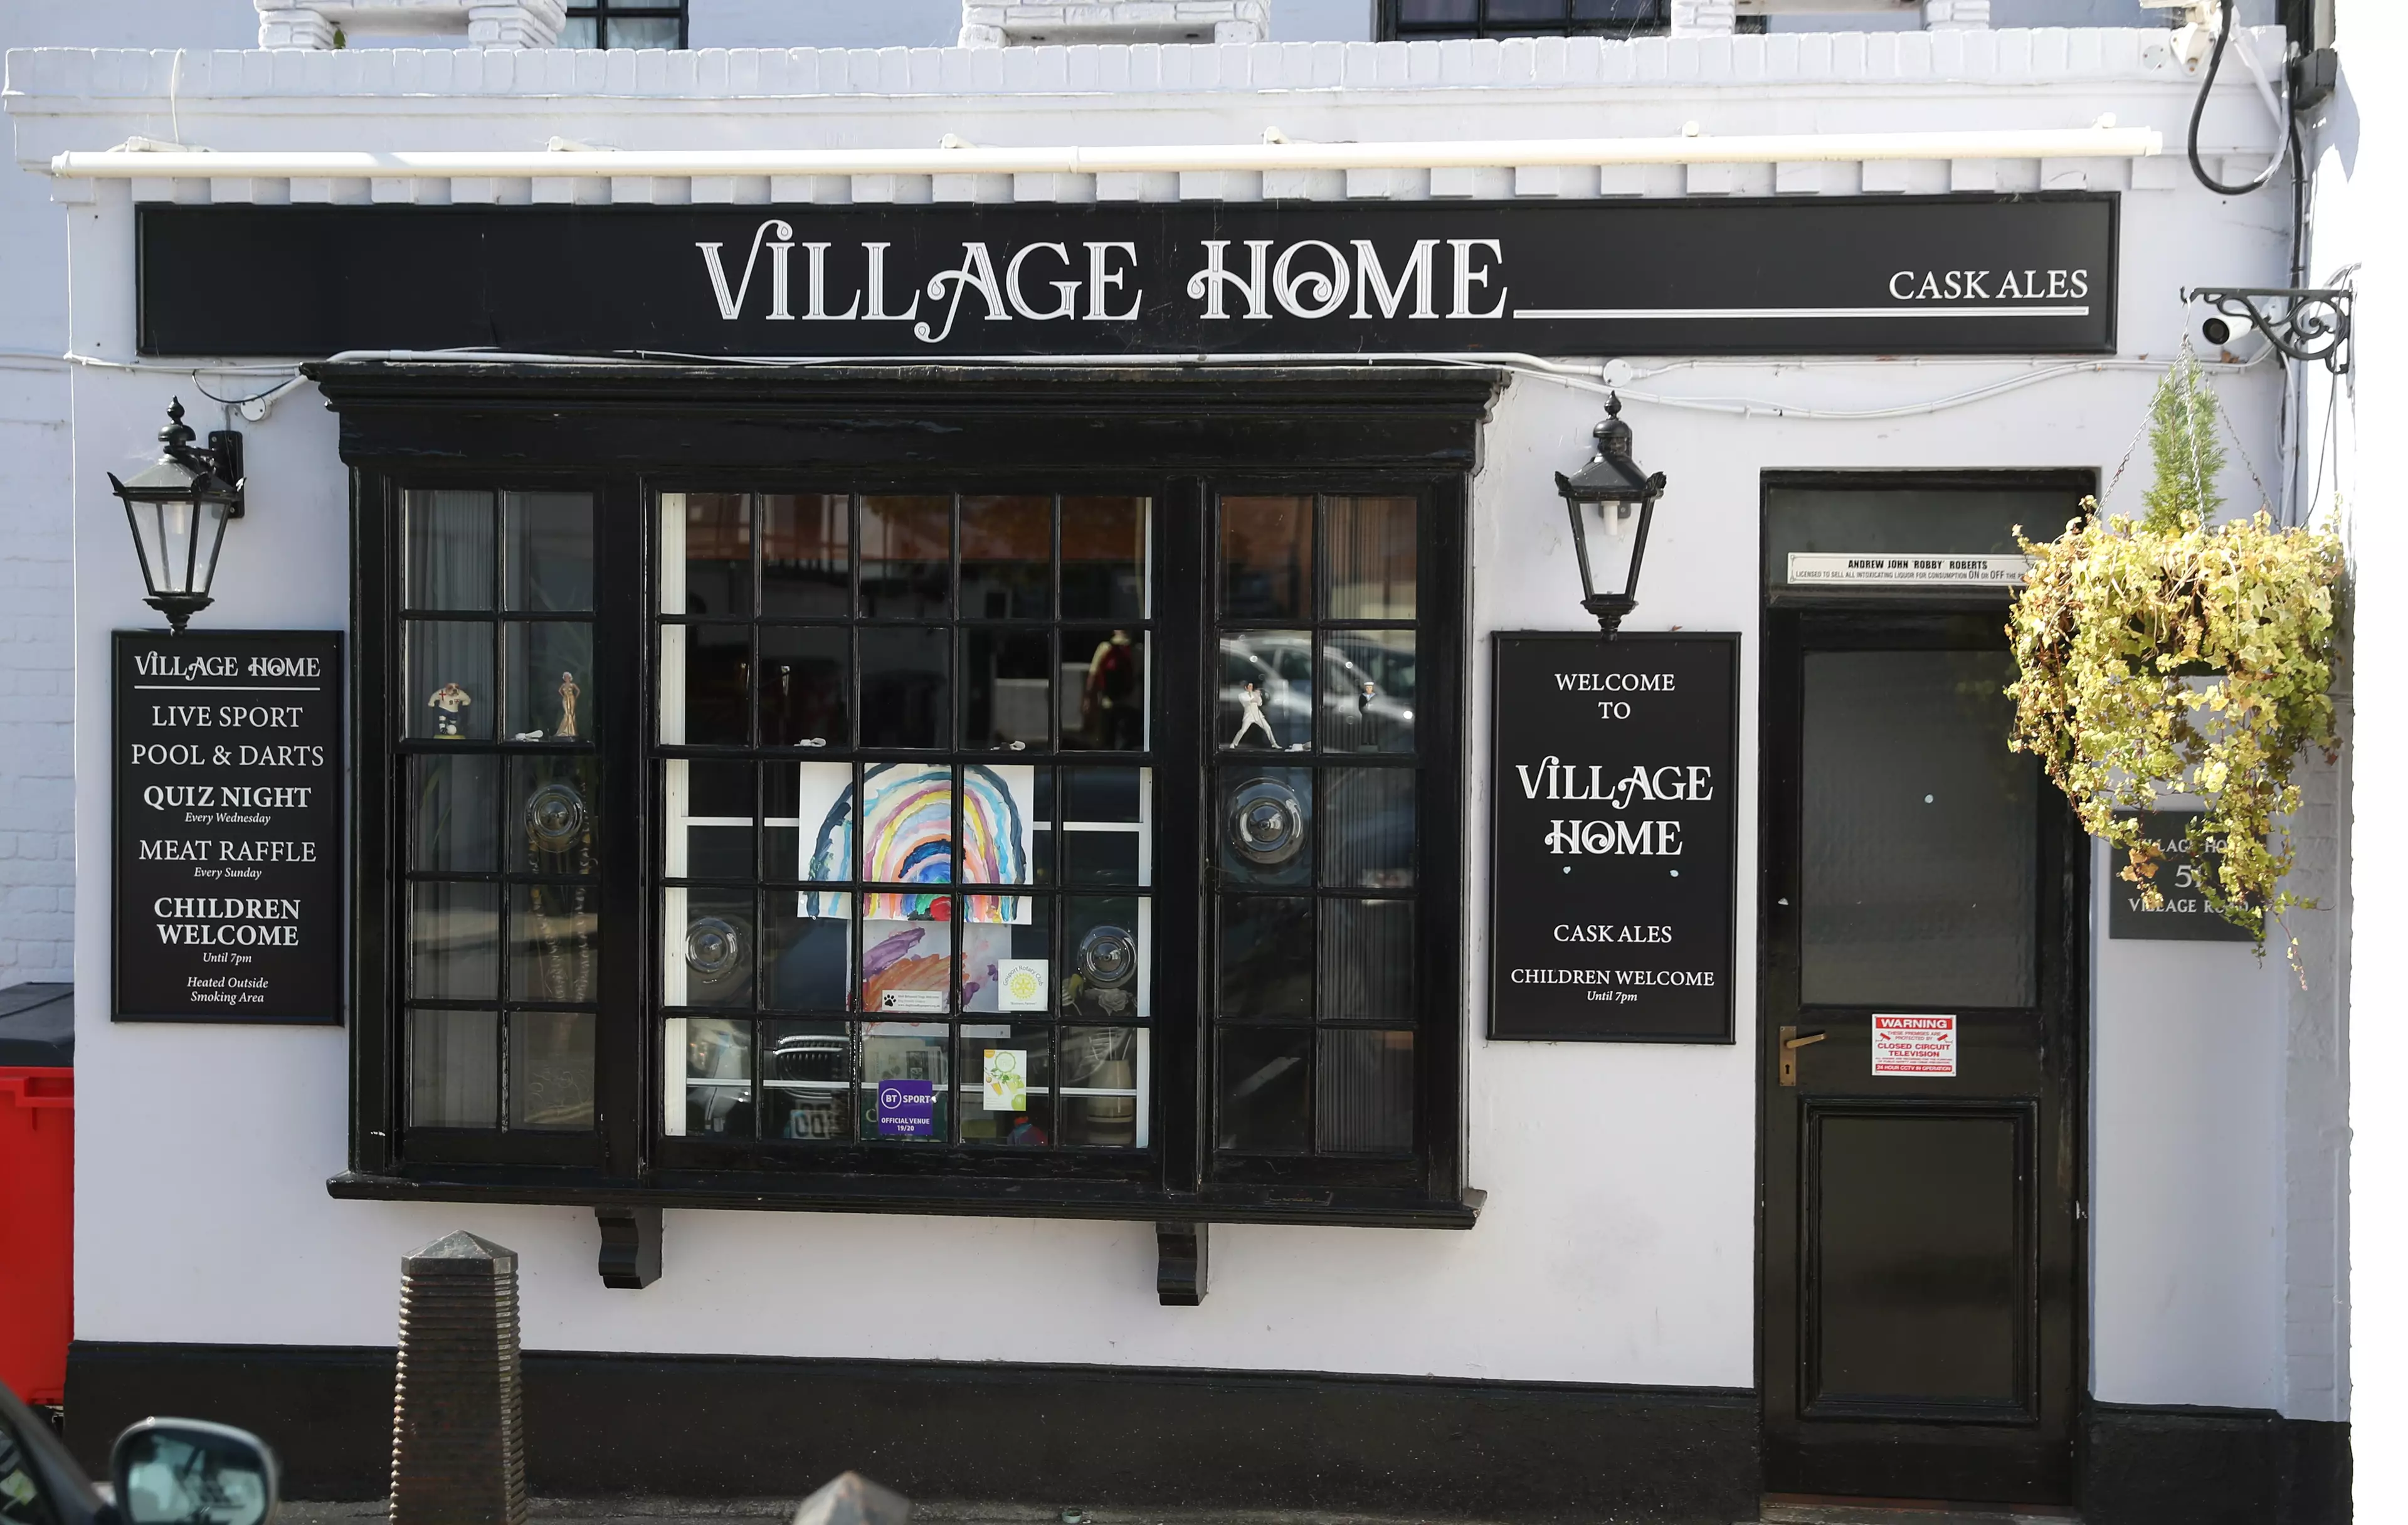 The Village Home pub in Alverstoke has also temporarily shut up shop (